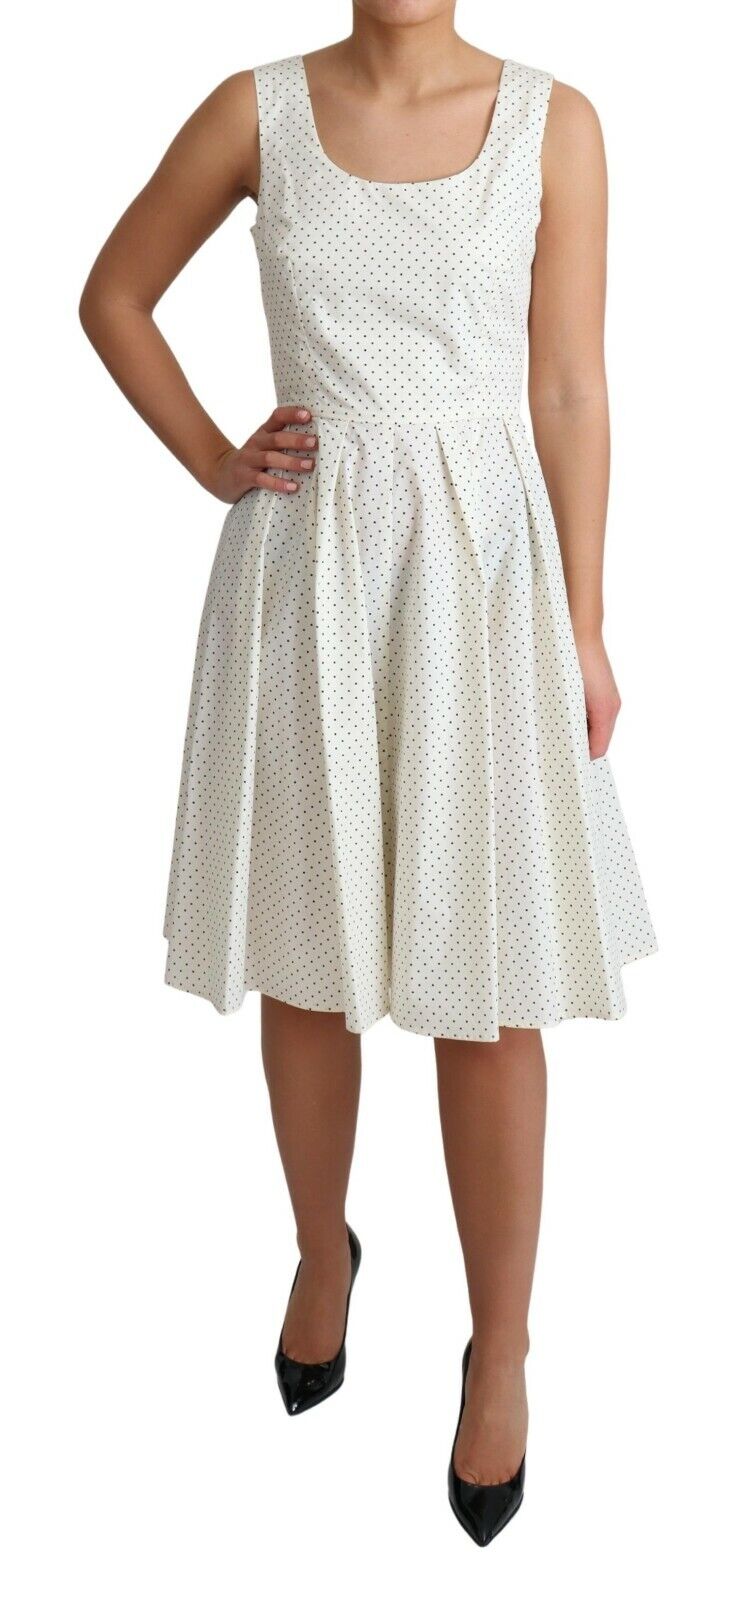 Elegant Sleeveless A-Line Polka Dotted Dress